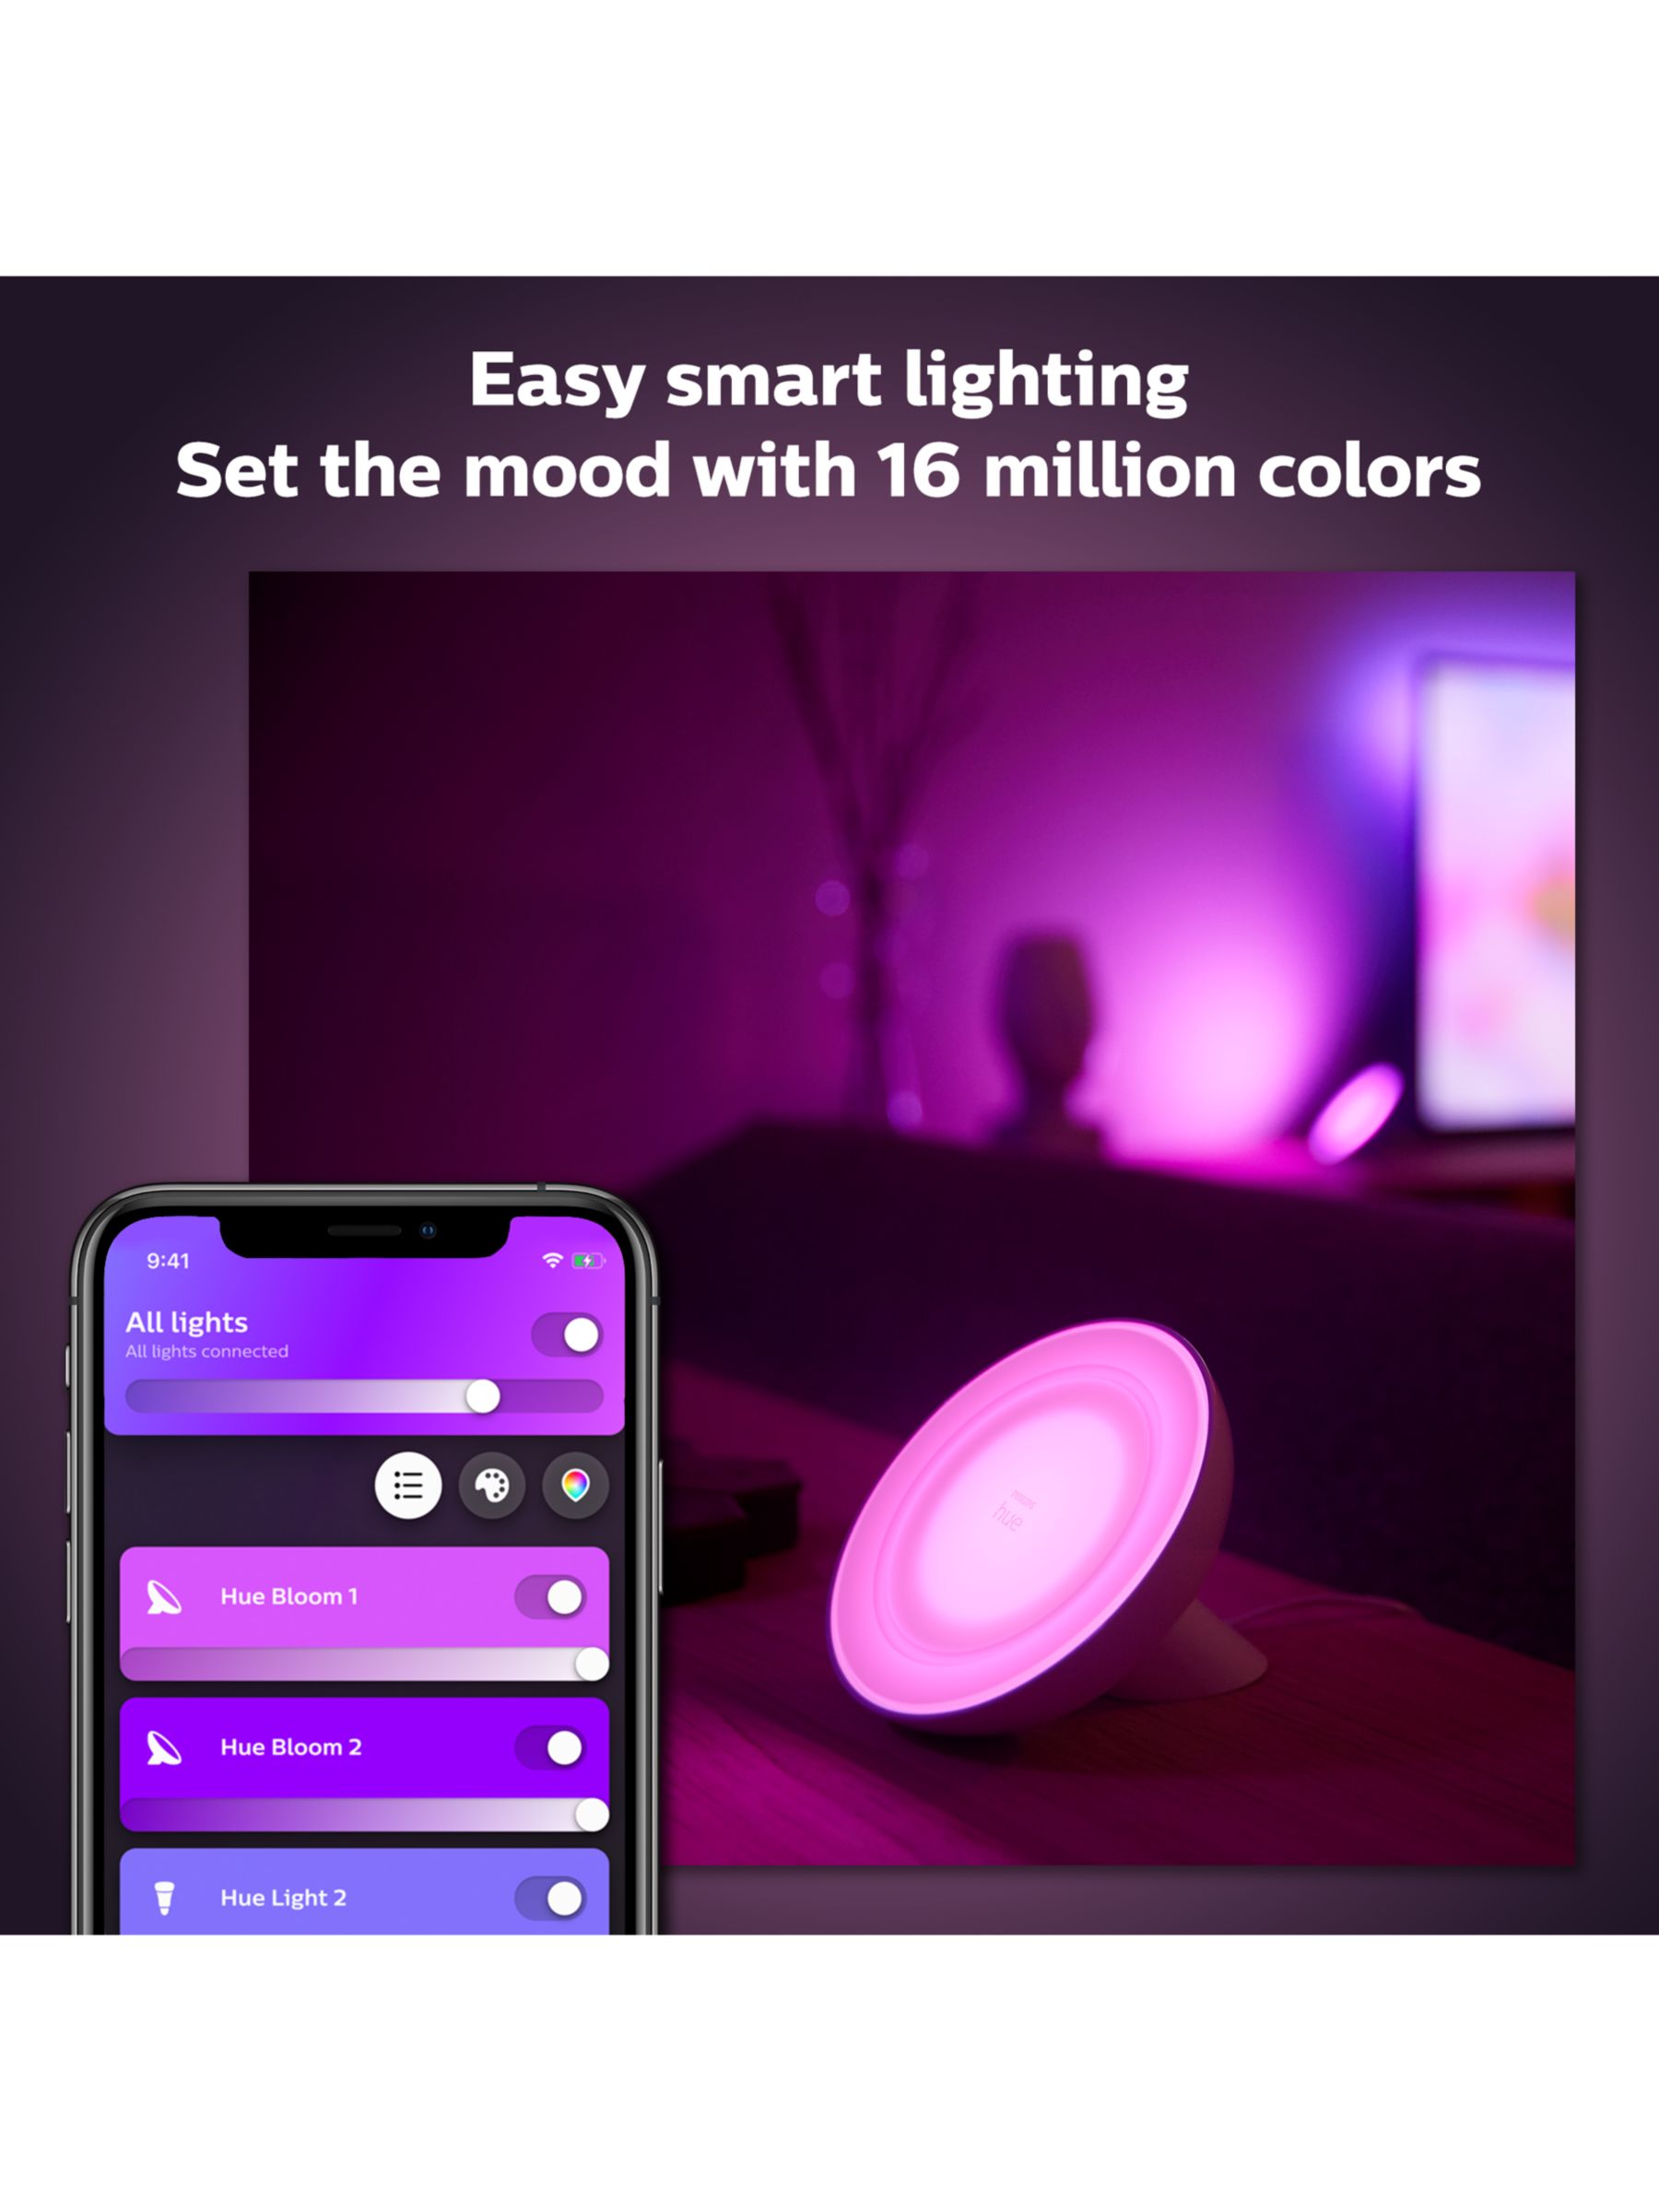 Philips Hue Smart GU10 LED Downlight - White & Colour